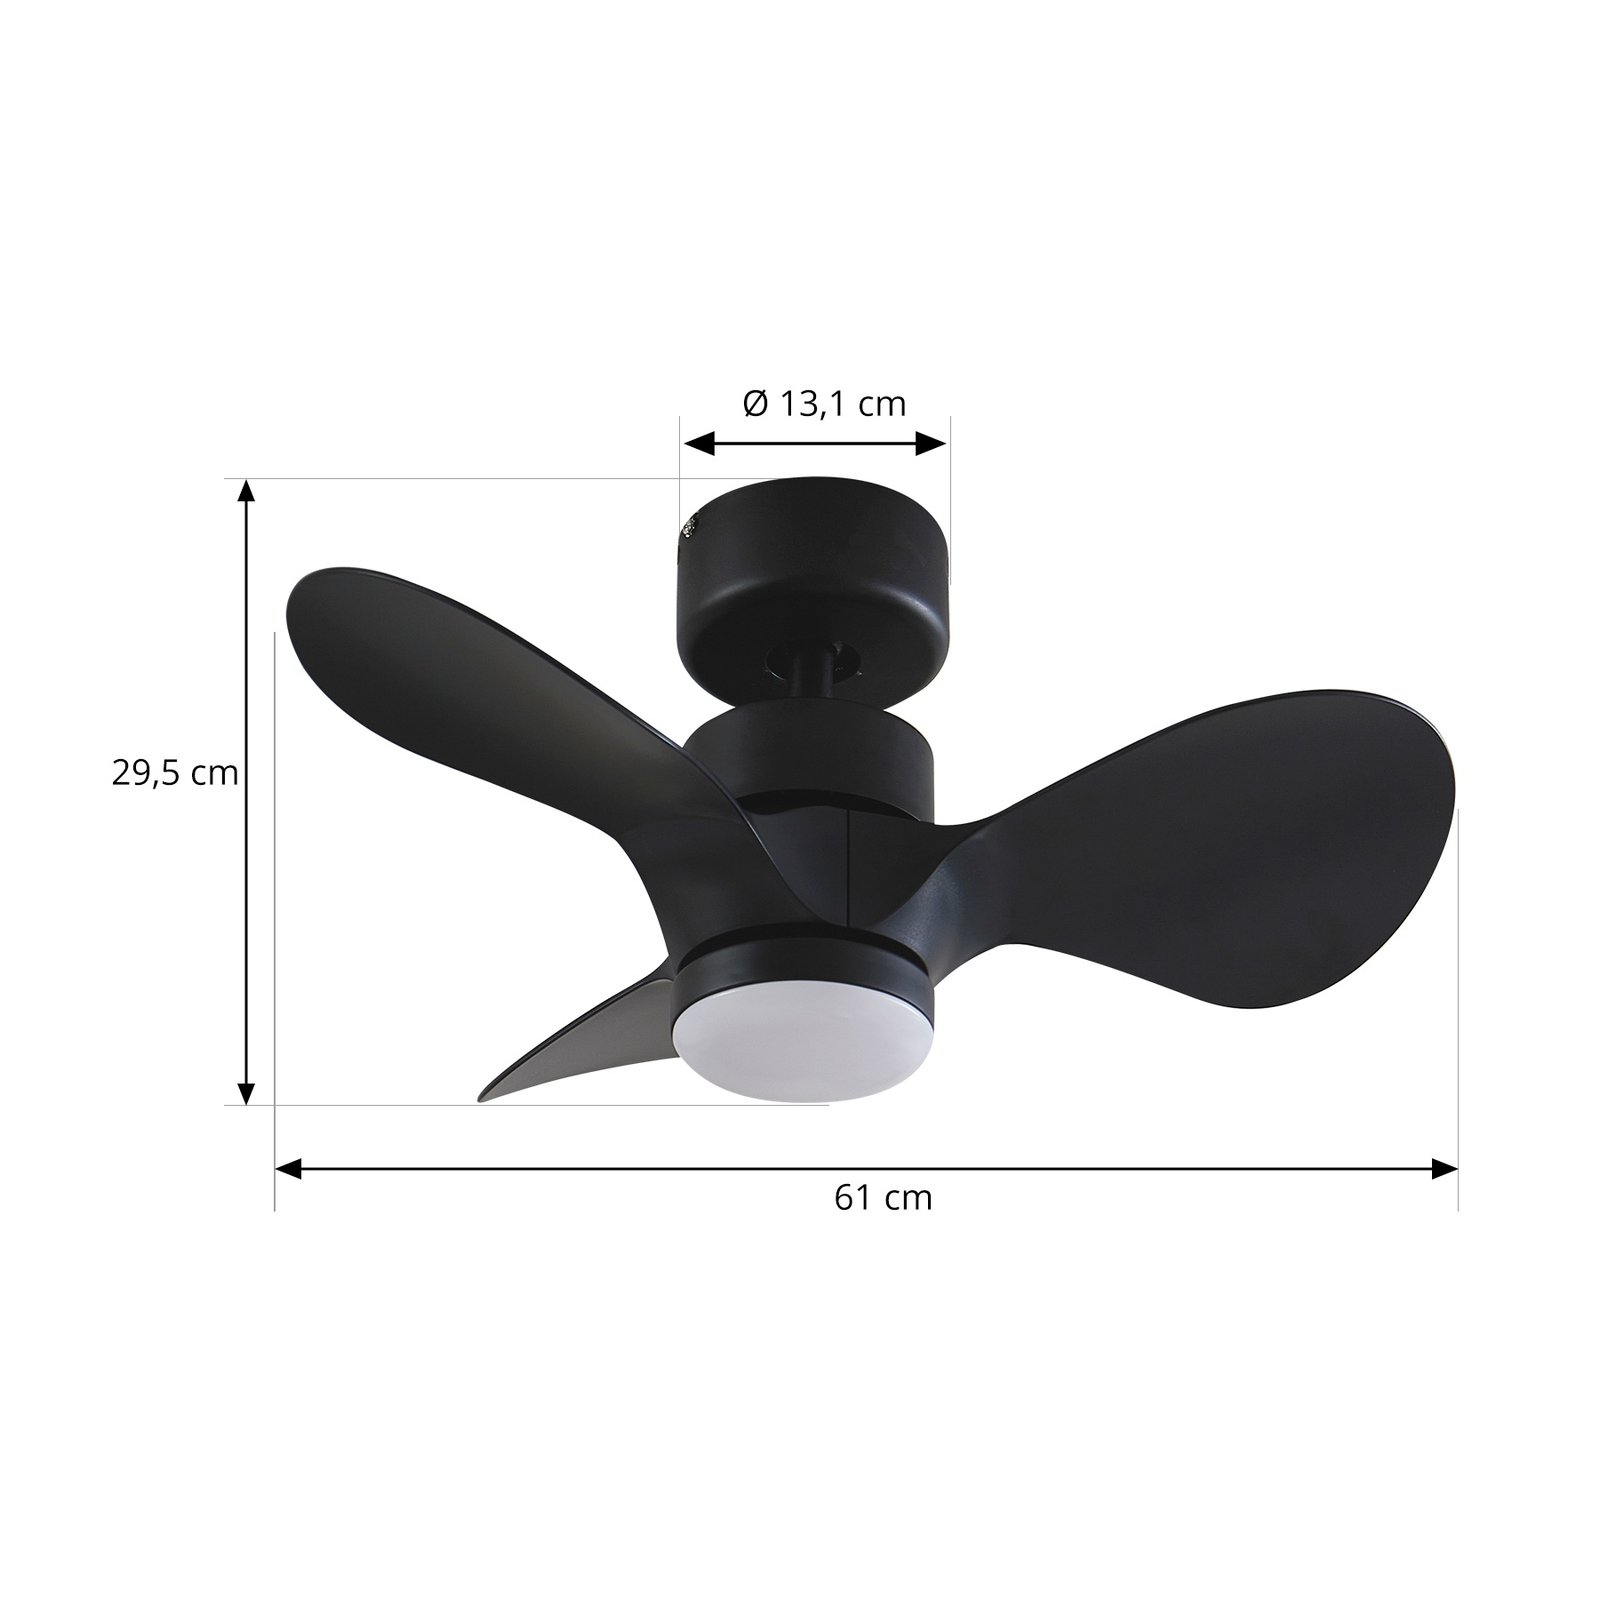 Lindby LED ceiling fan Enon, black, DC motor, quiet